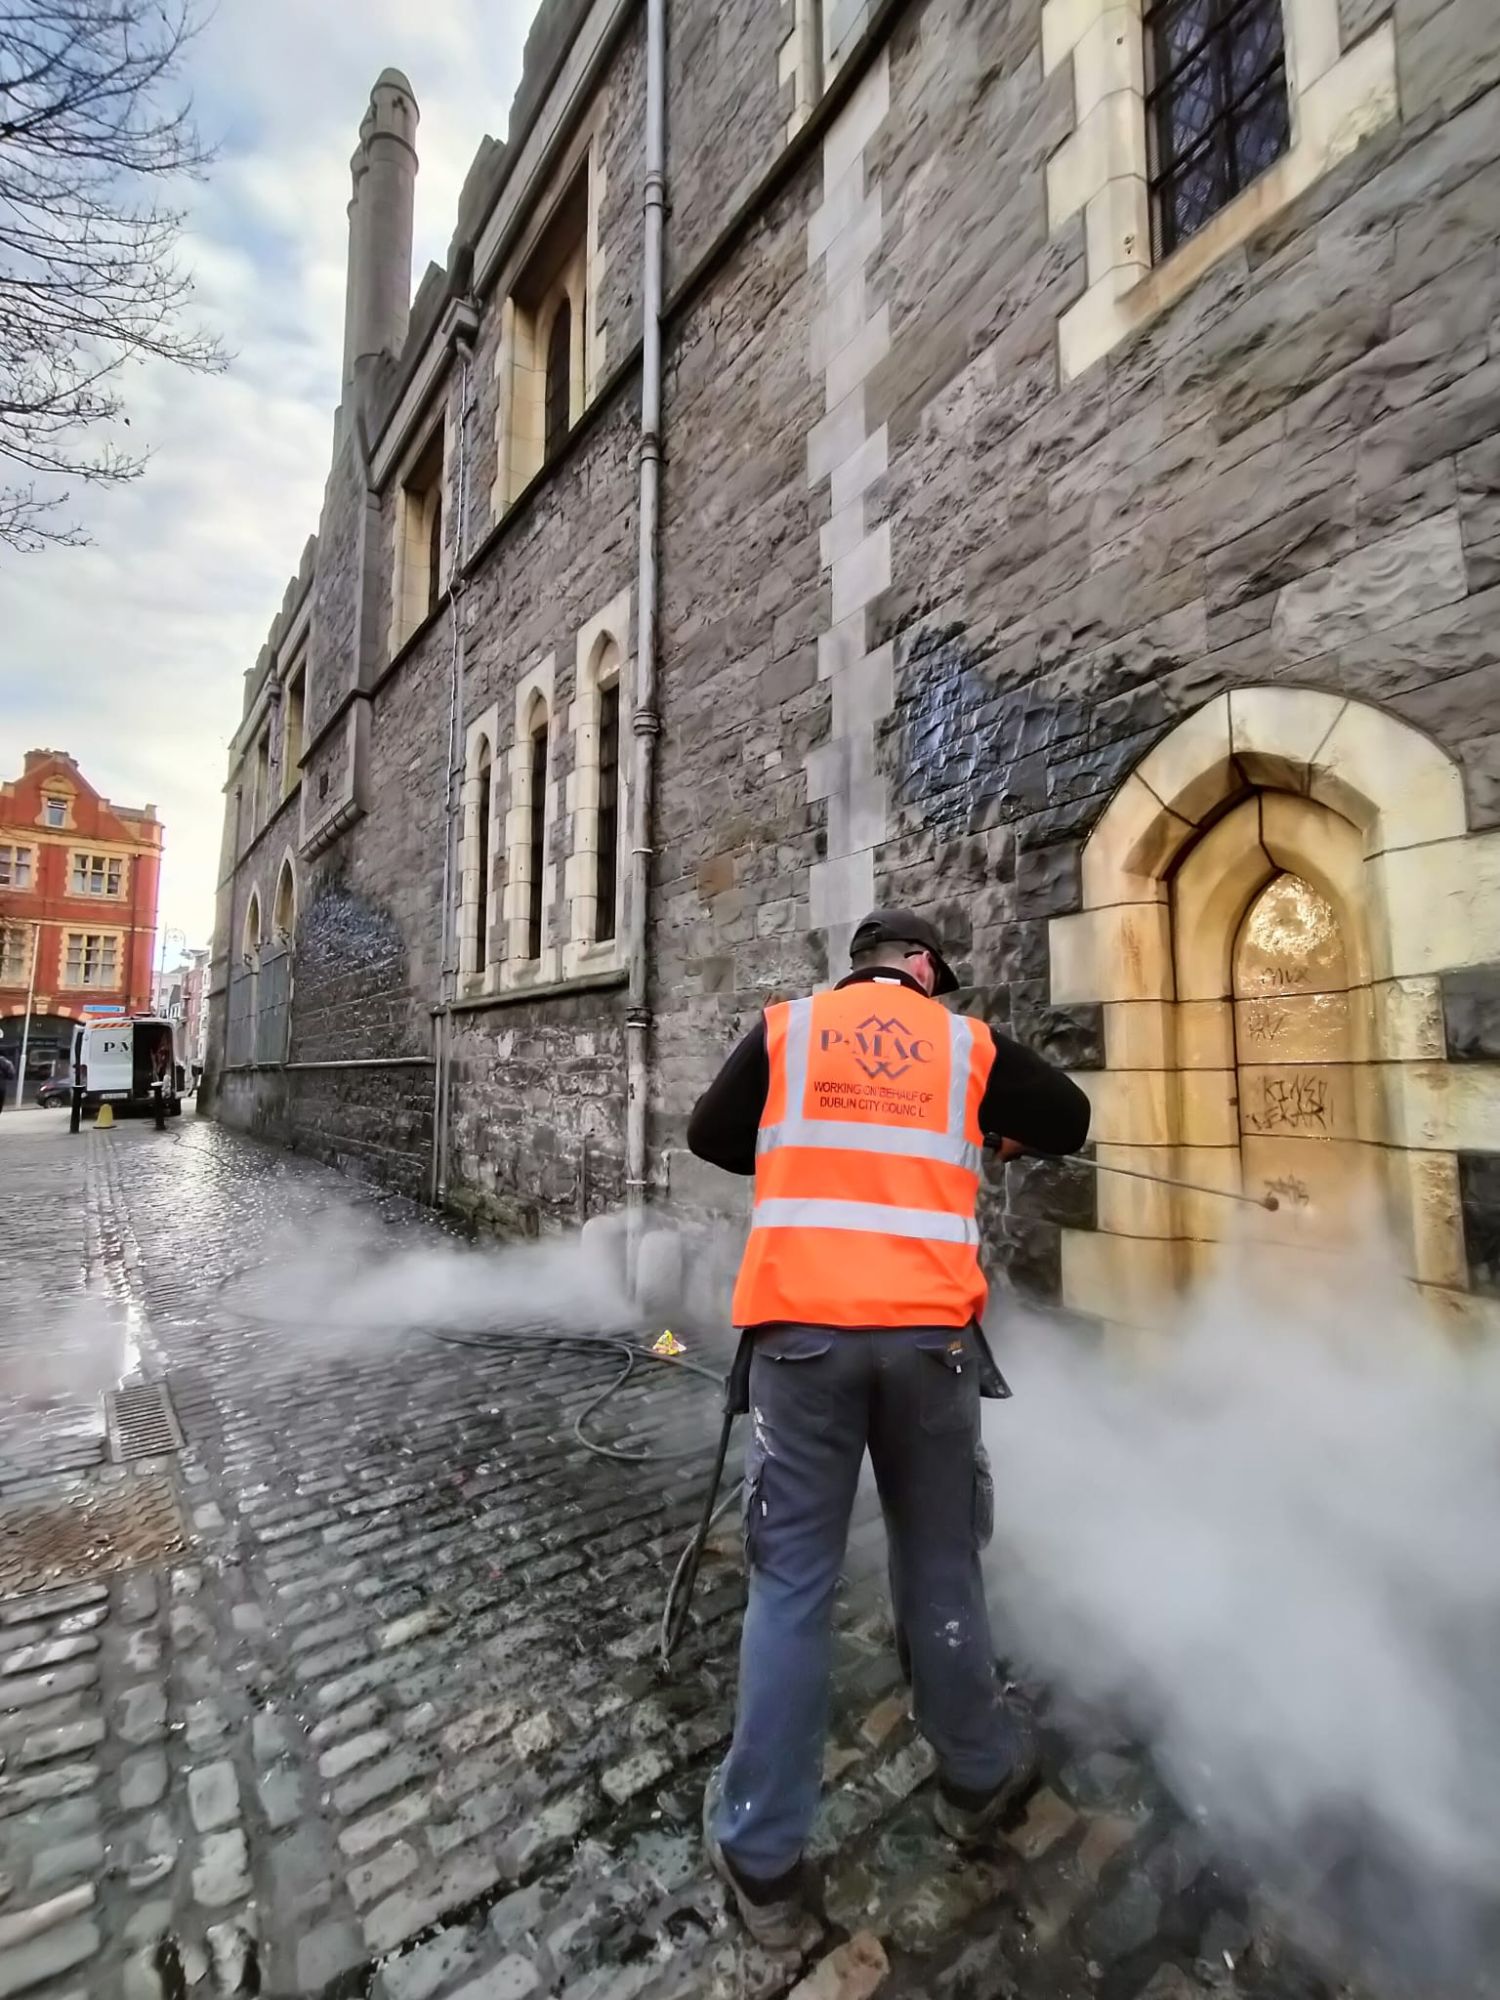 PMAC graffiti team removing graffiti from St Patricks Cathedral in Dublin